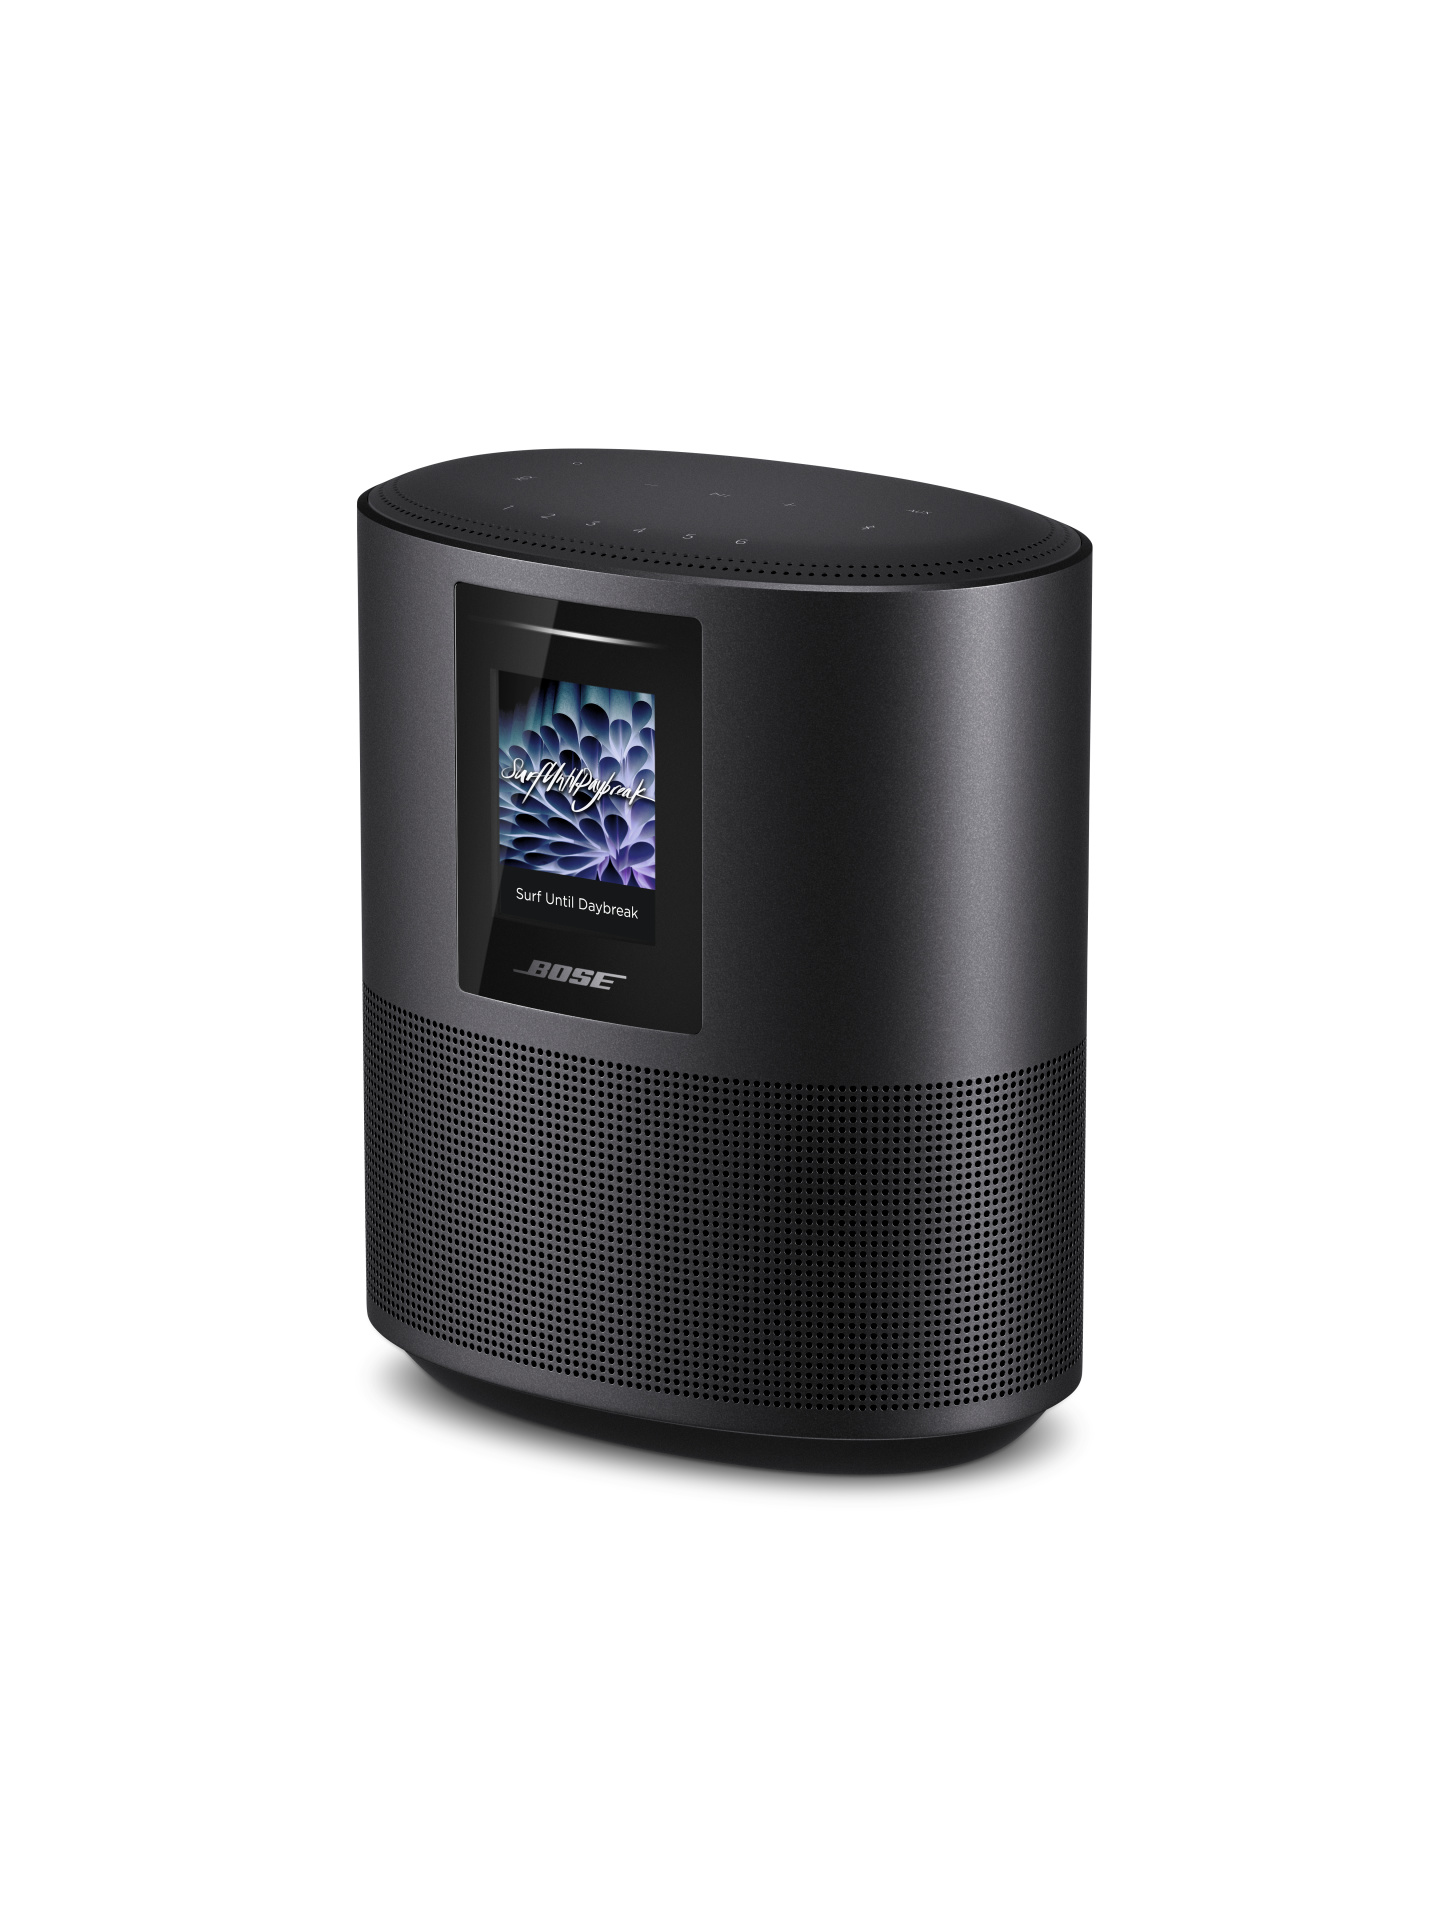 Bose Home Speaker 500 Wireless Smart Speaker with Google Assistant - Black - image 4 of 6